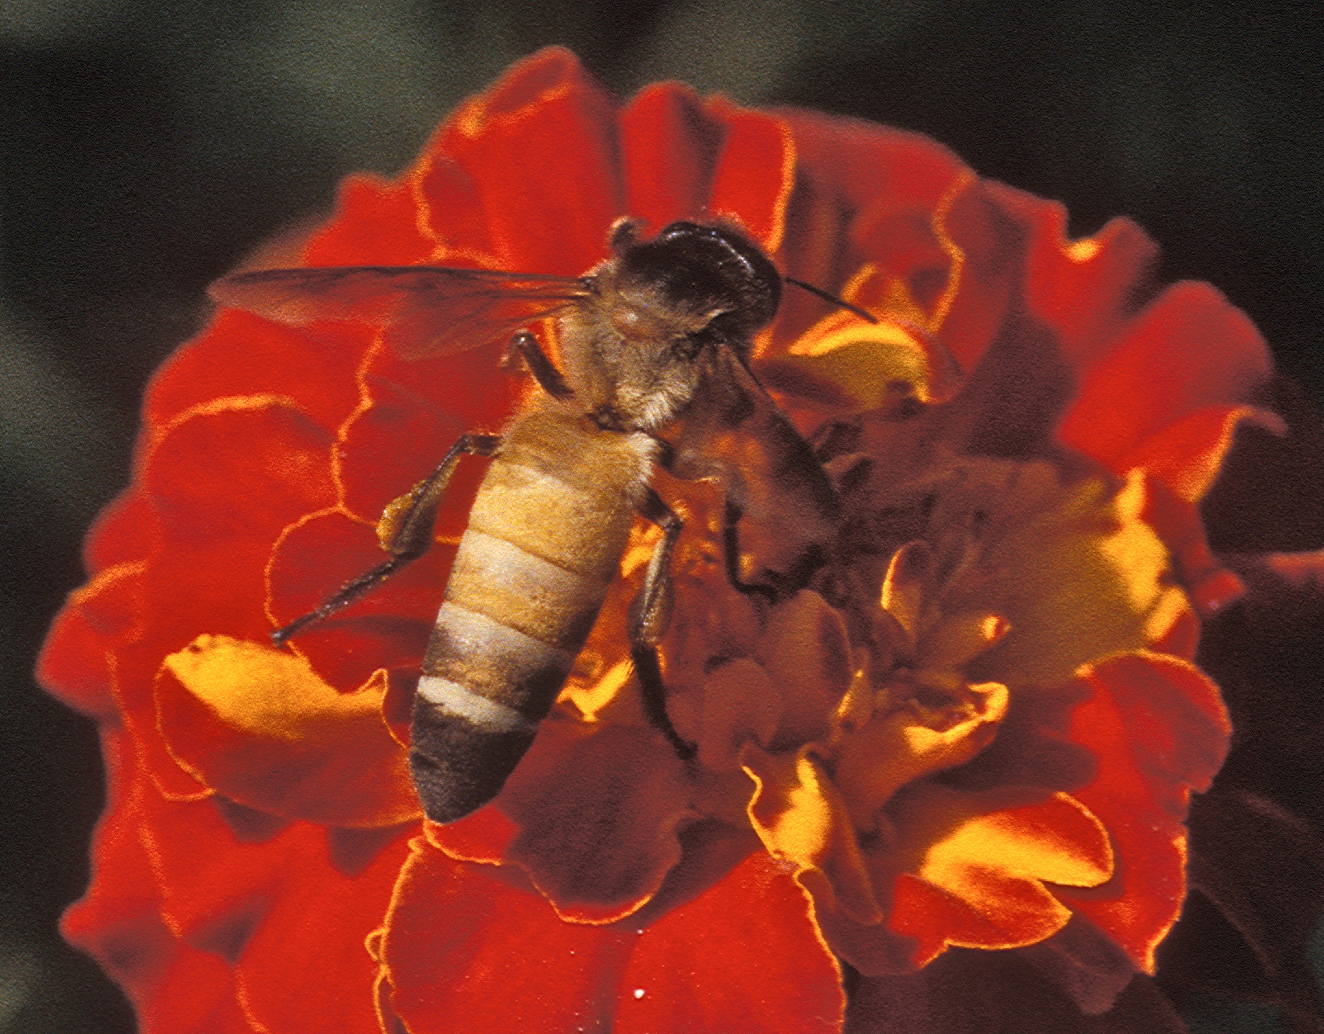 Giant honeybee on a red/orange flower